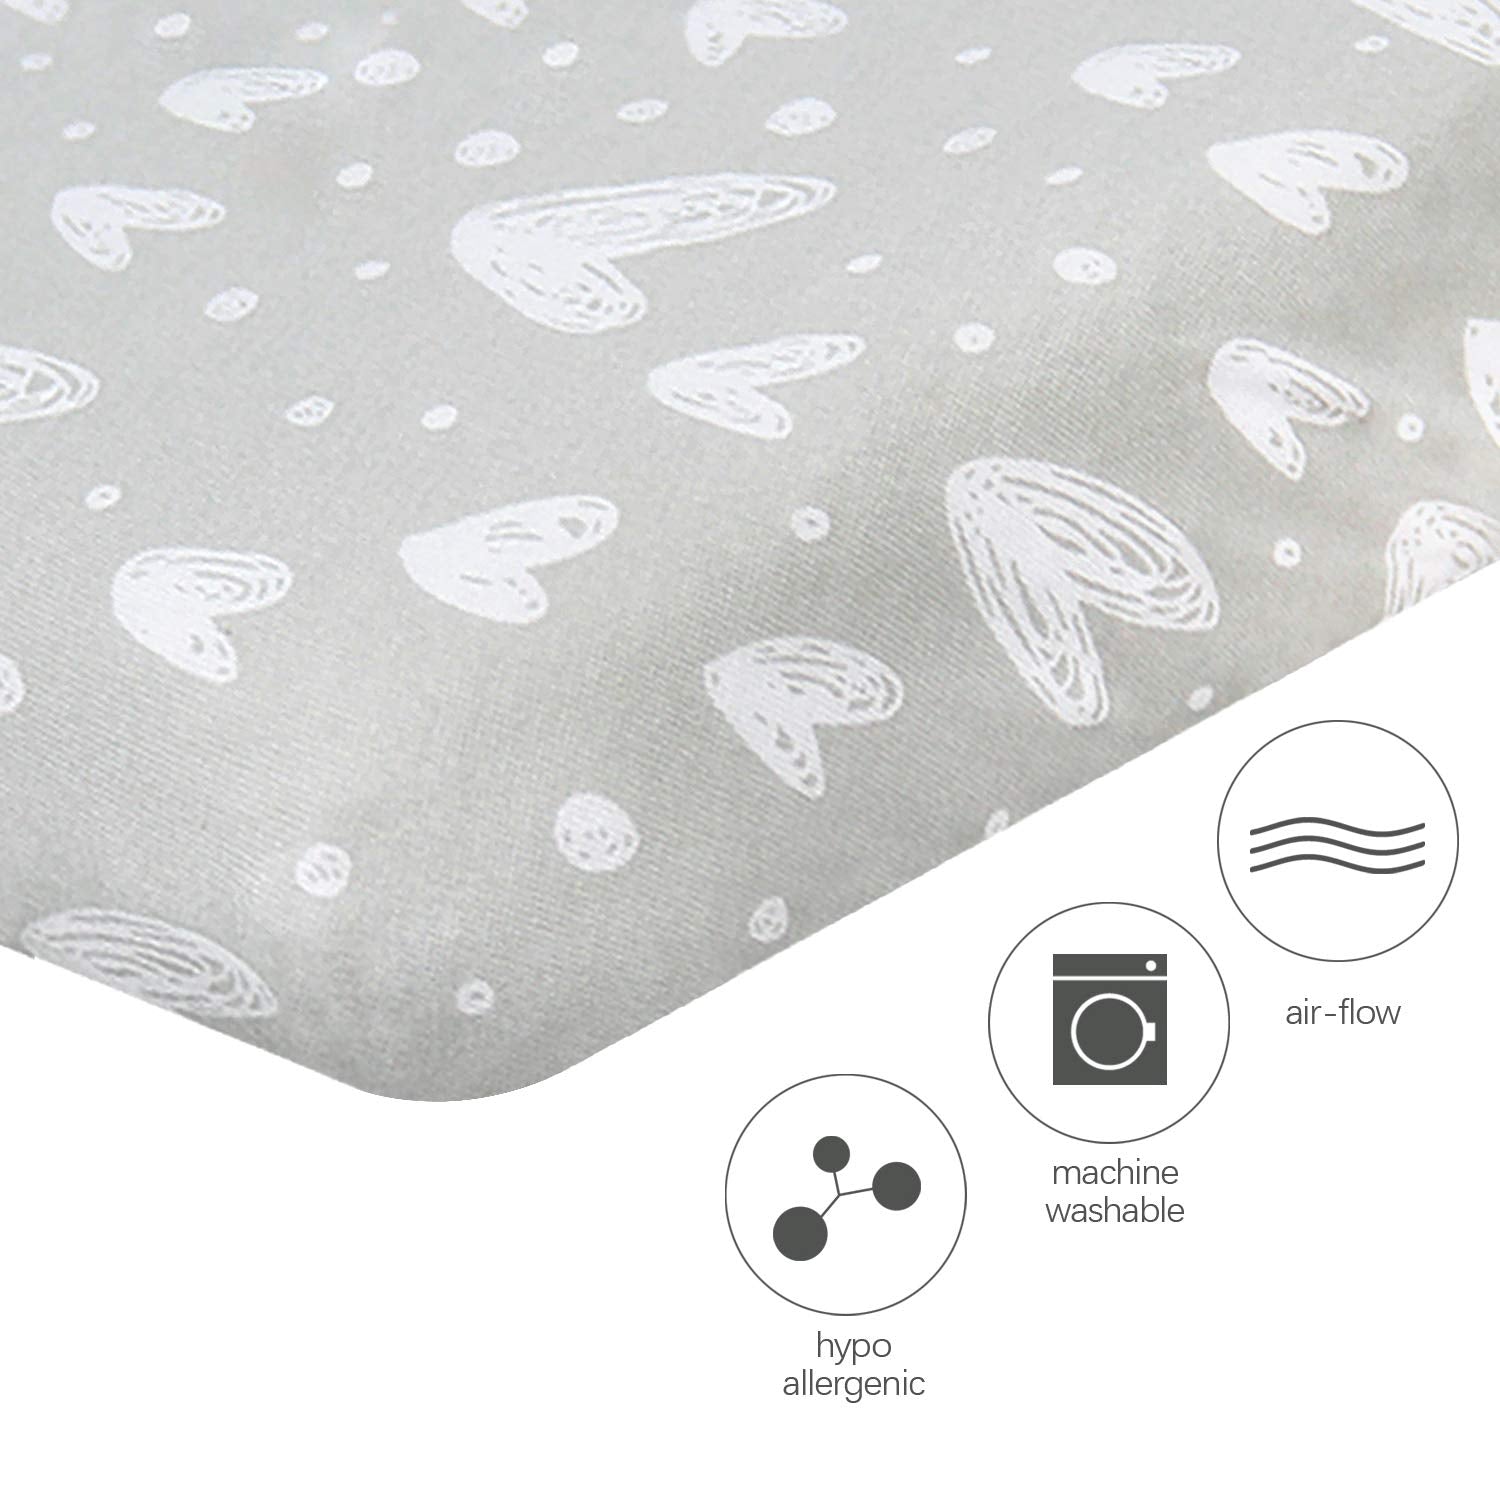 Crib Sheets - 2 Pack, Cotton ( for Standard Crib 52"x28" ) - Biloban Online Store